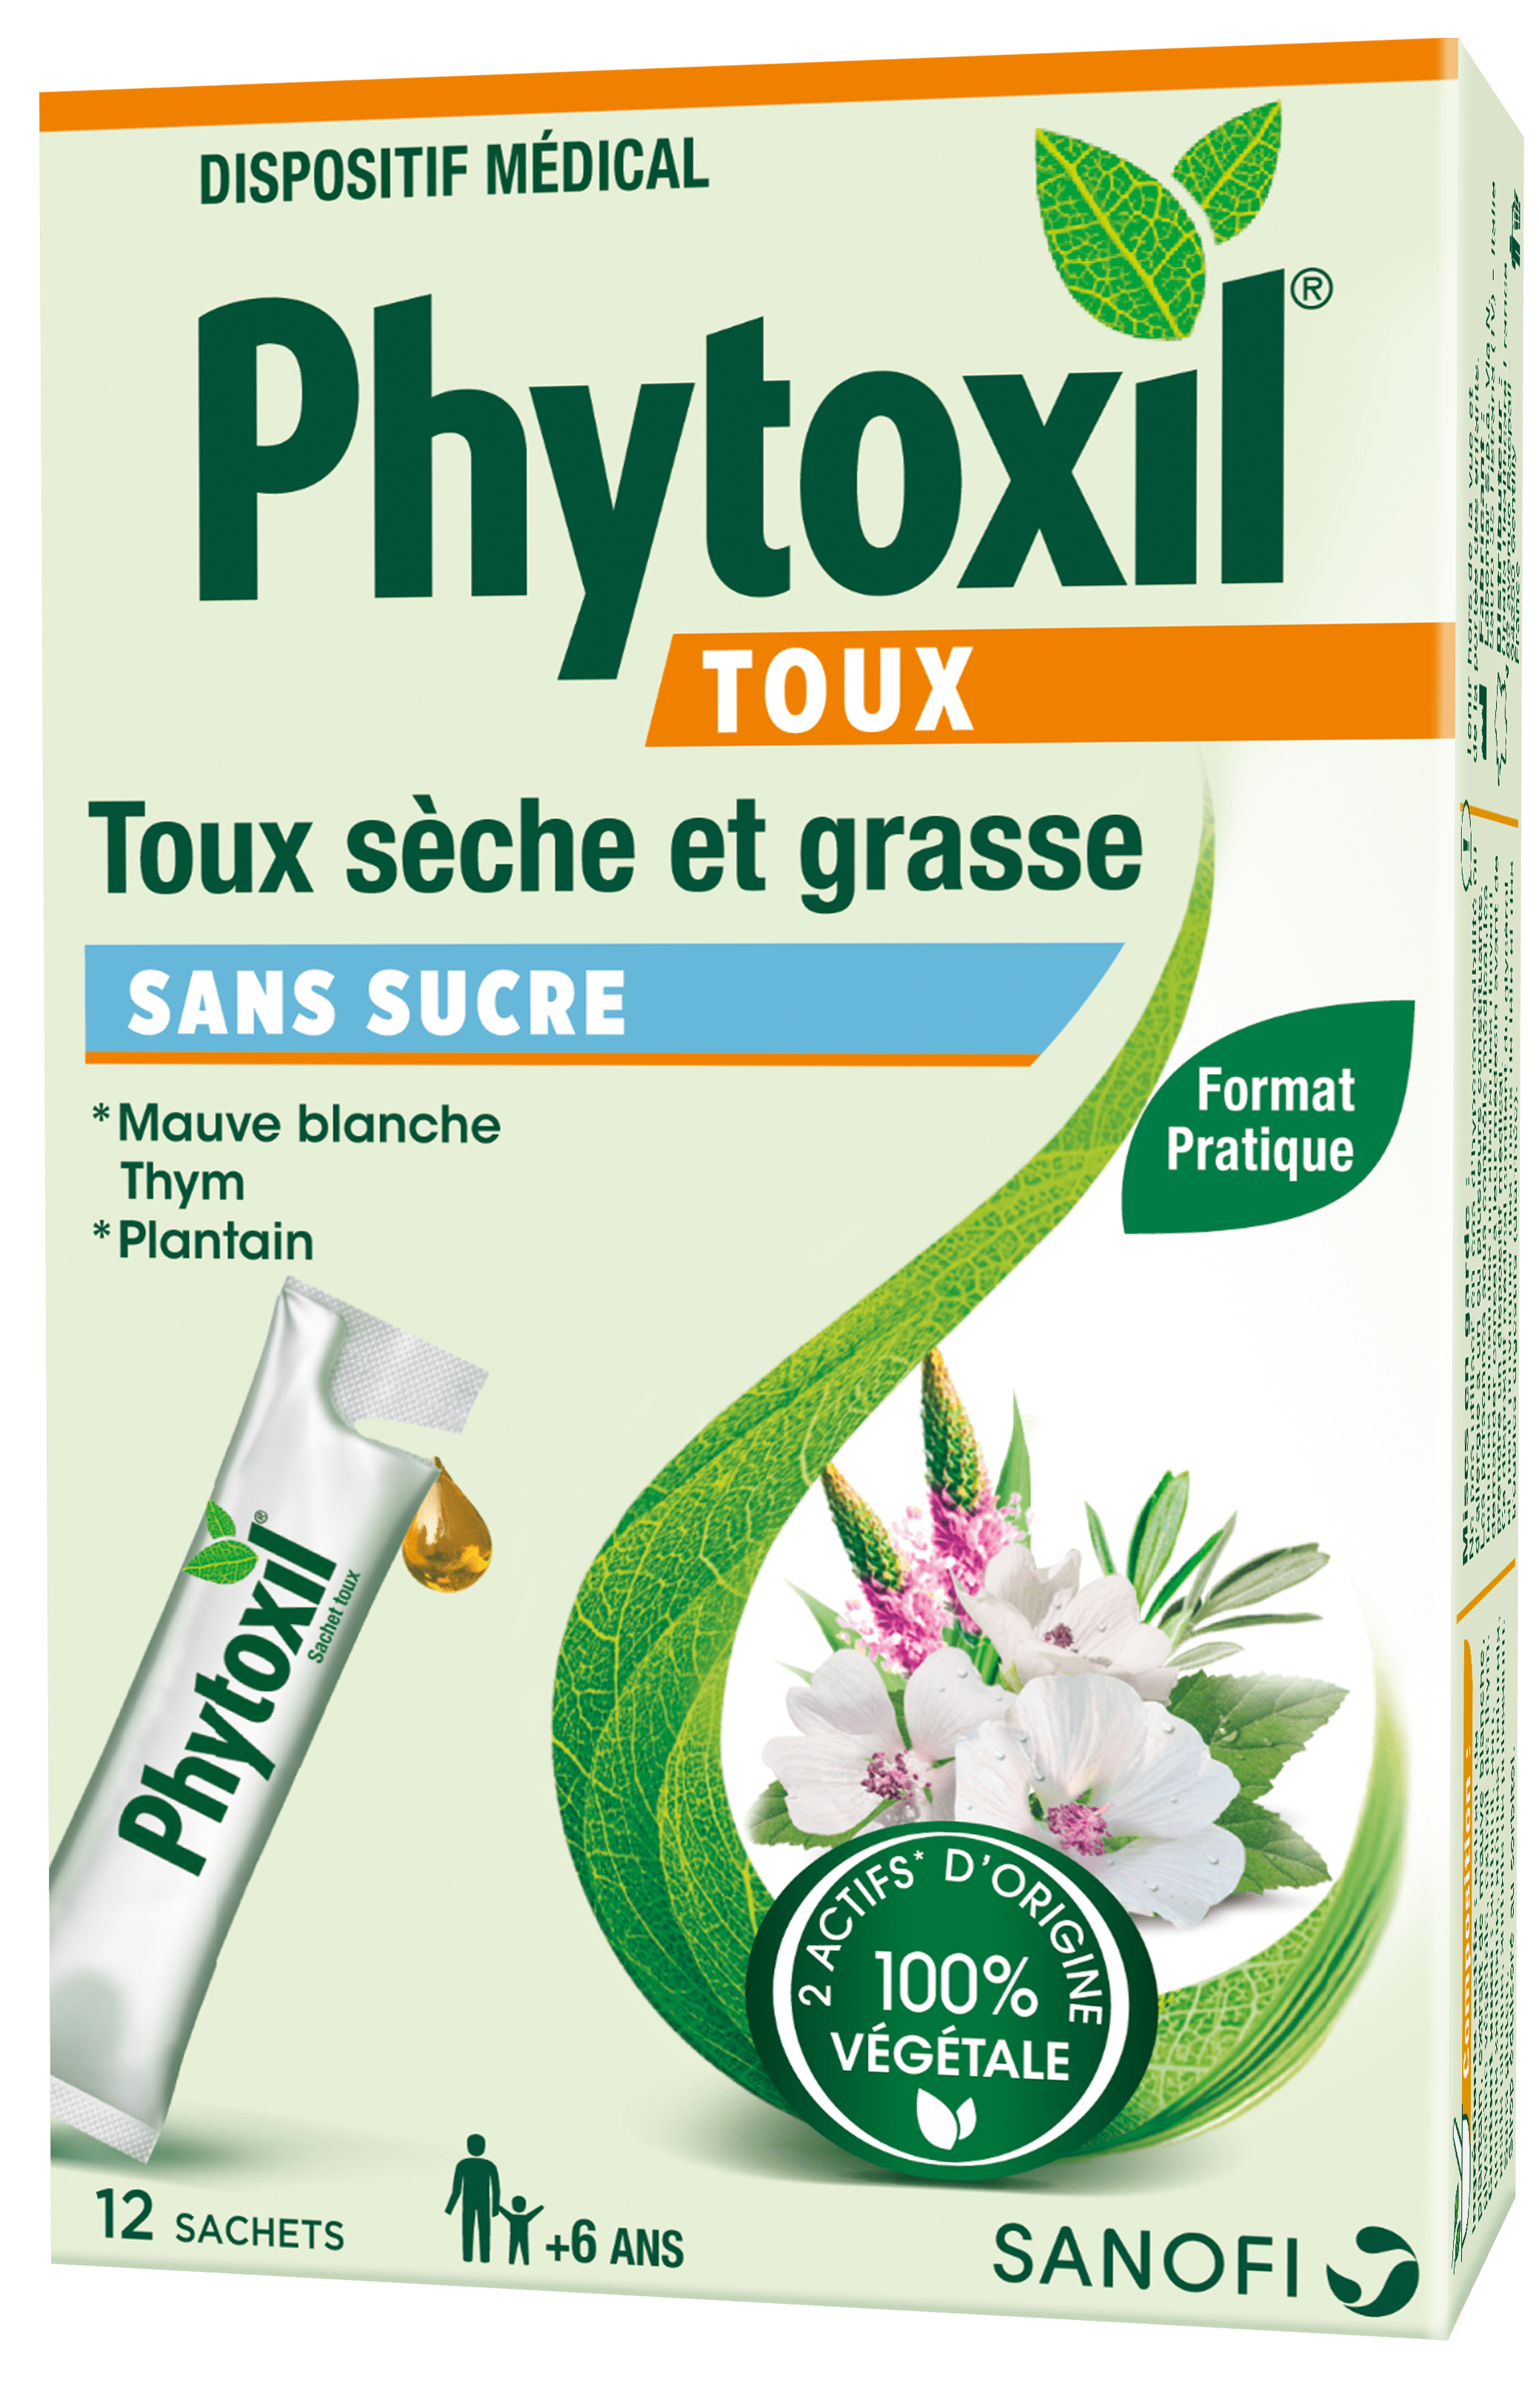 Buy PHYTOXIL Gorge Irritée Sans sucre - Arôme